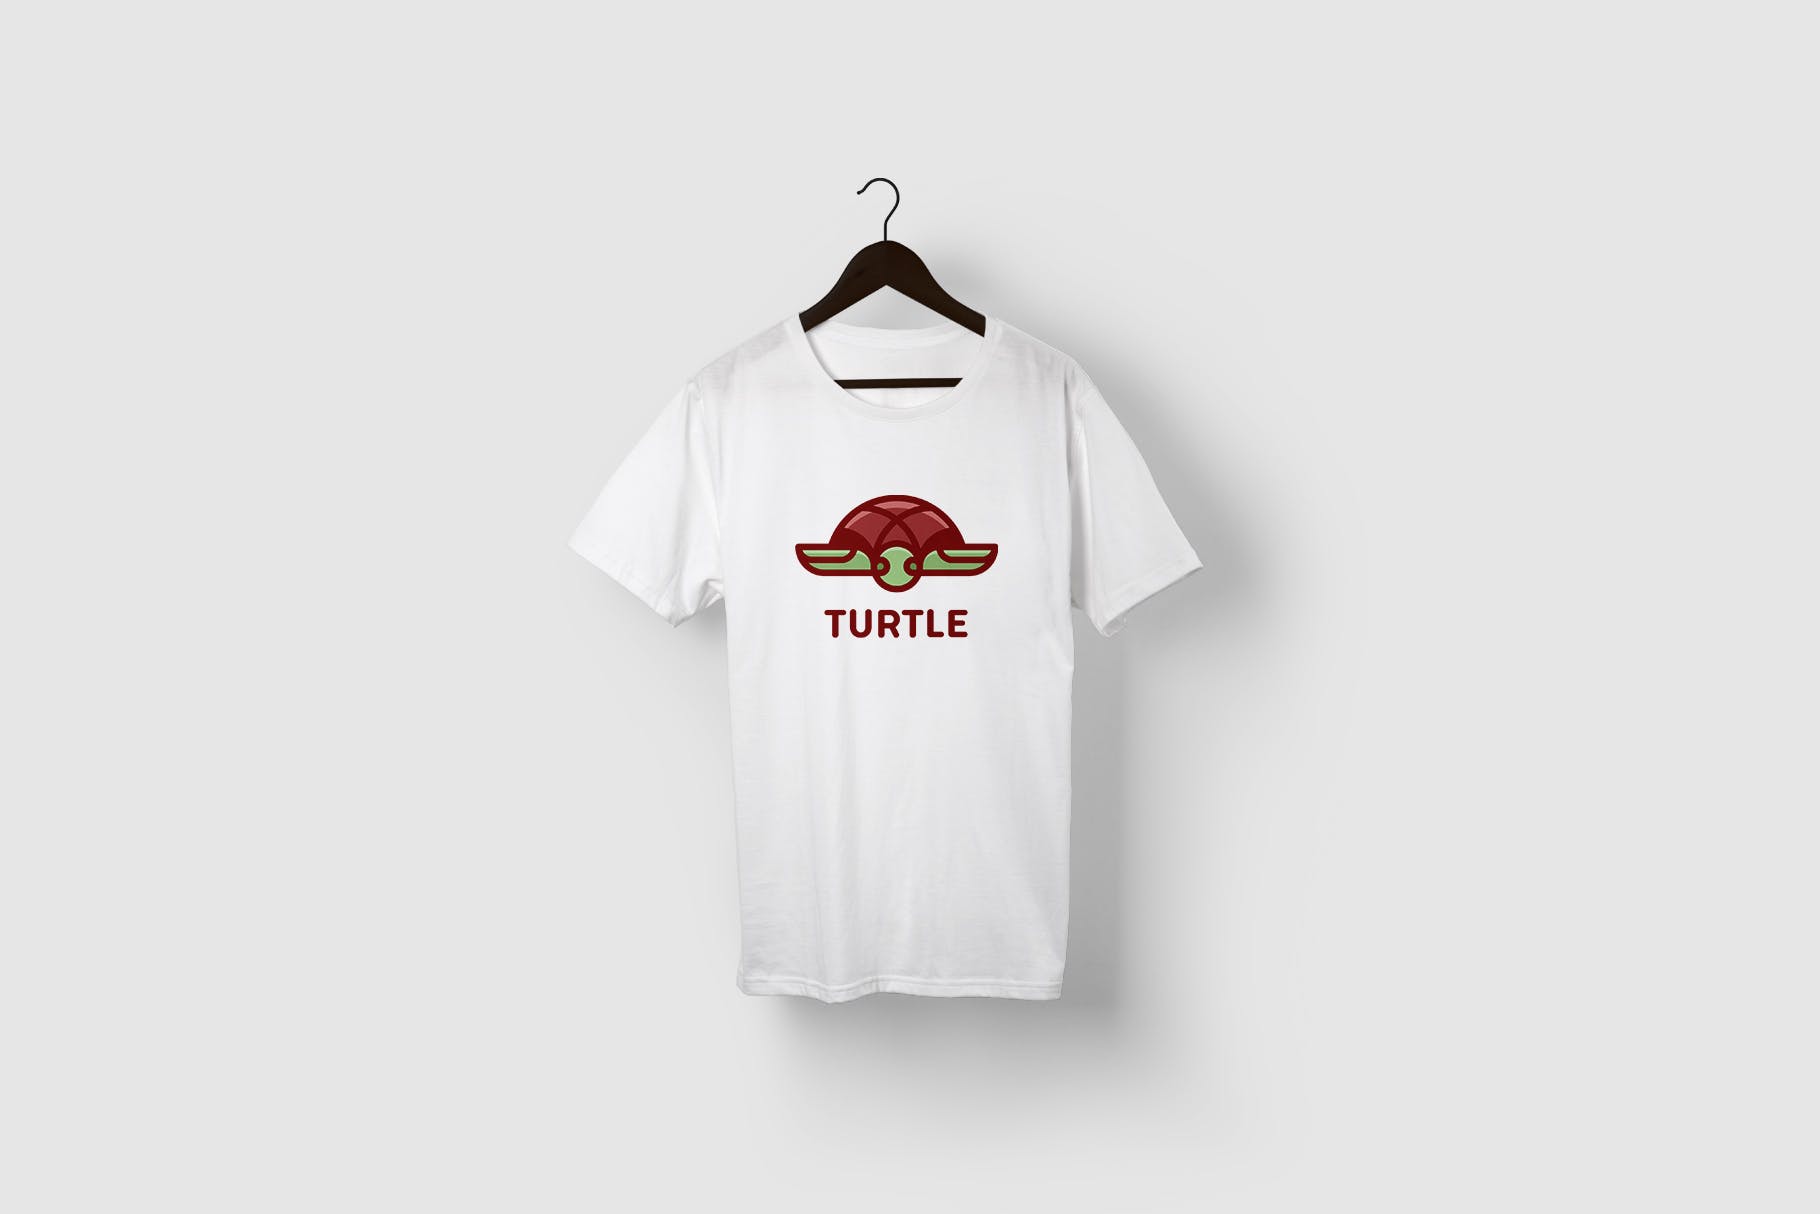 海龟乌龟图形品牌Logo设计模板 Turtle插图(6)